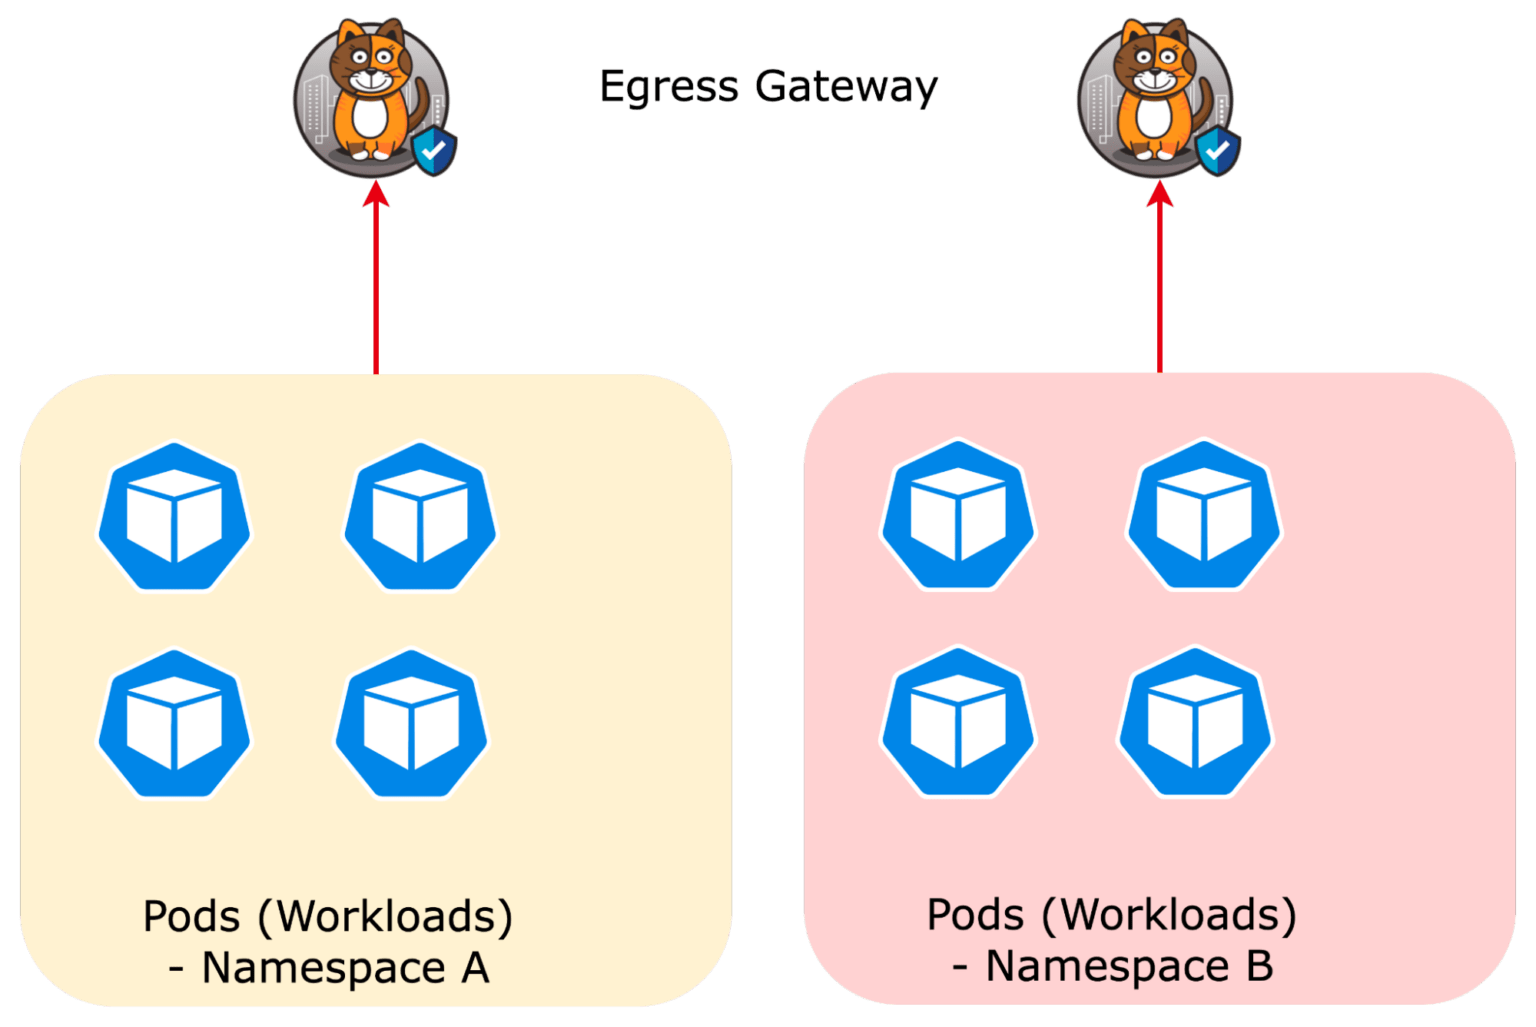 1 to 1 egress gateway